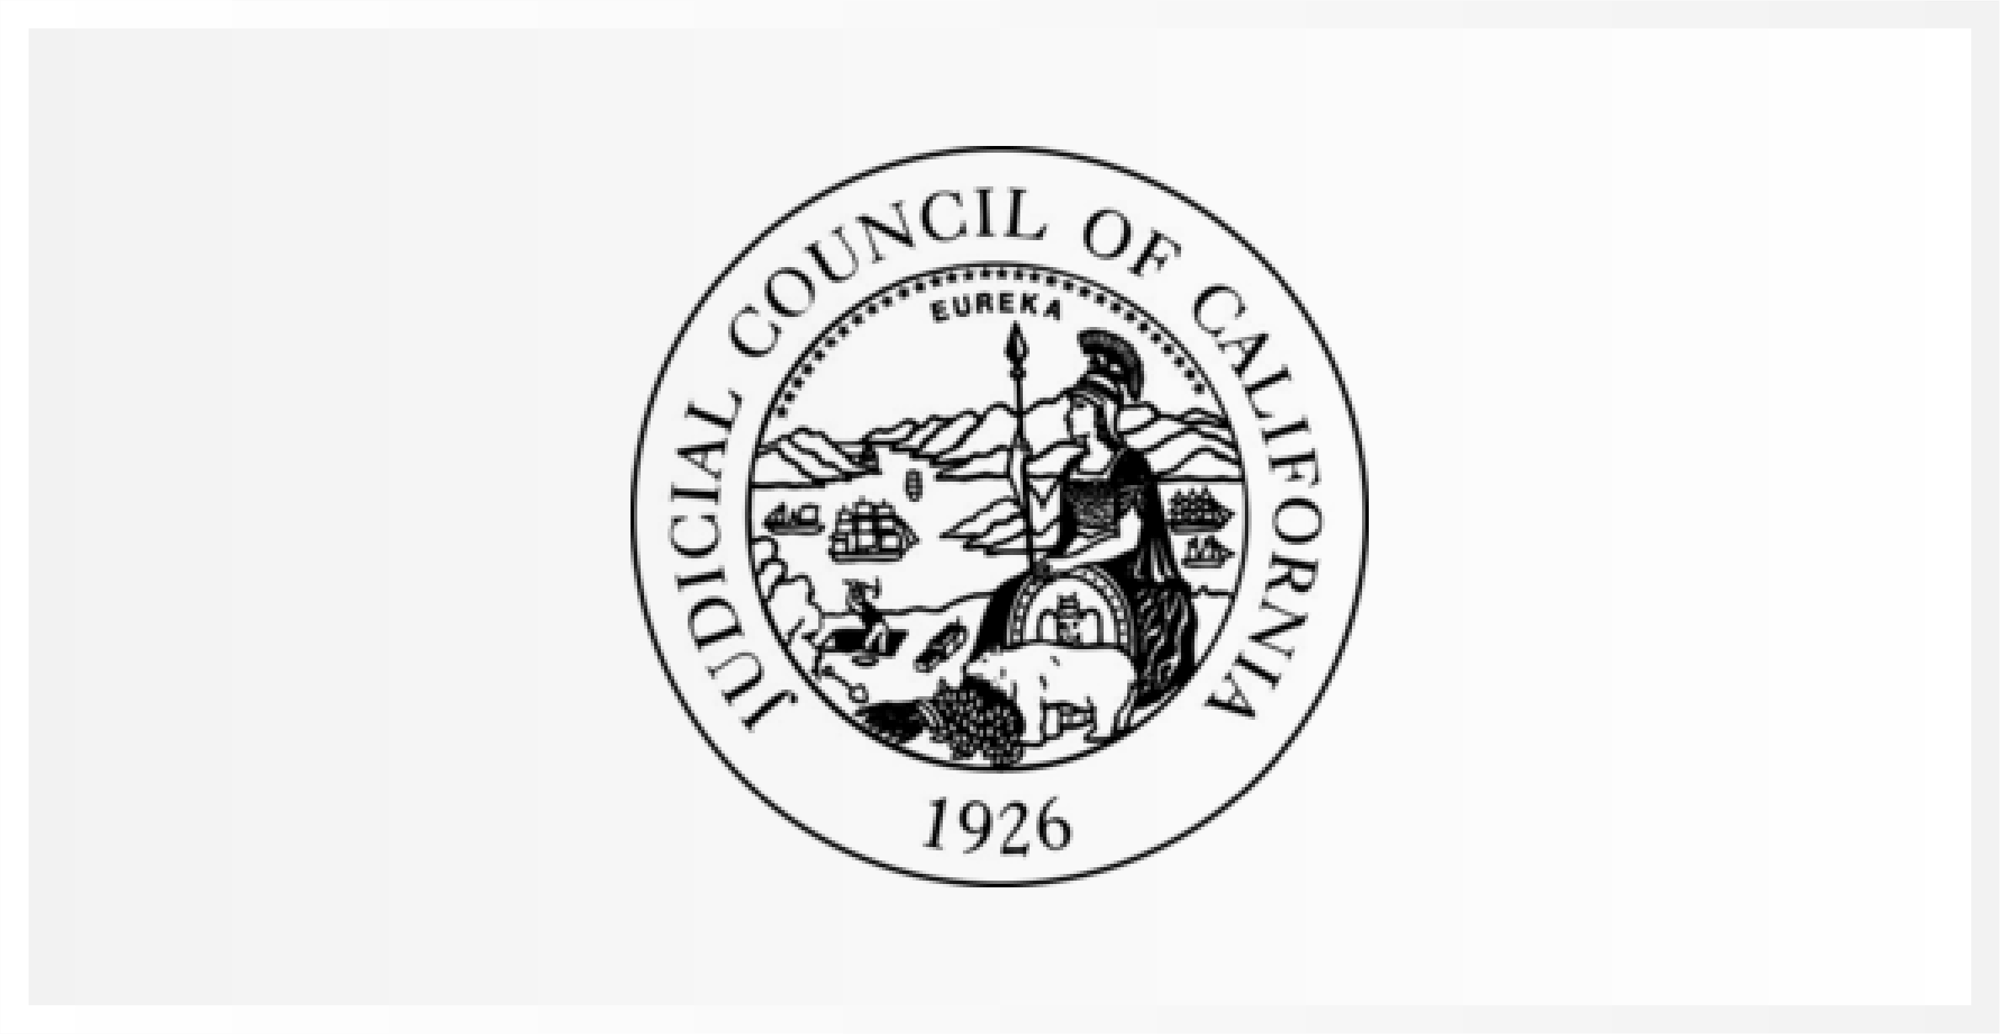 Judical-council-of-california-logo